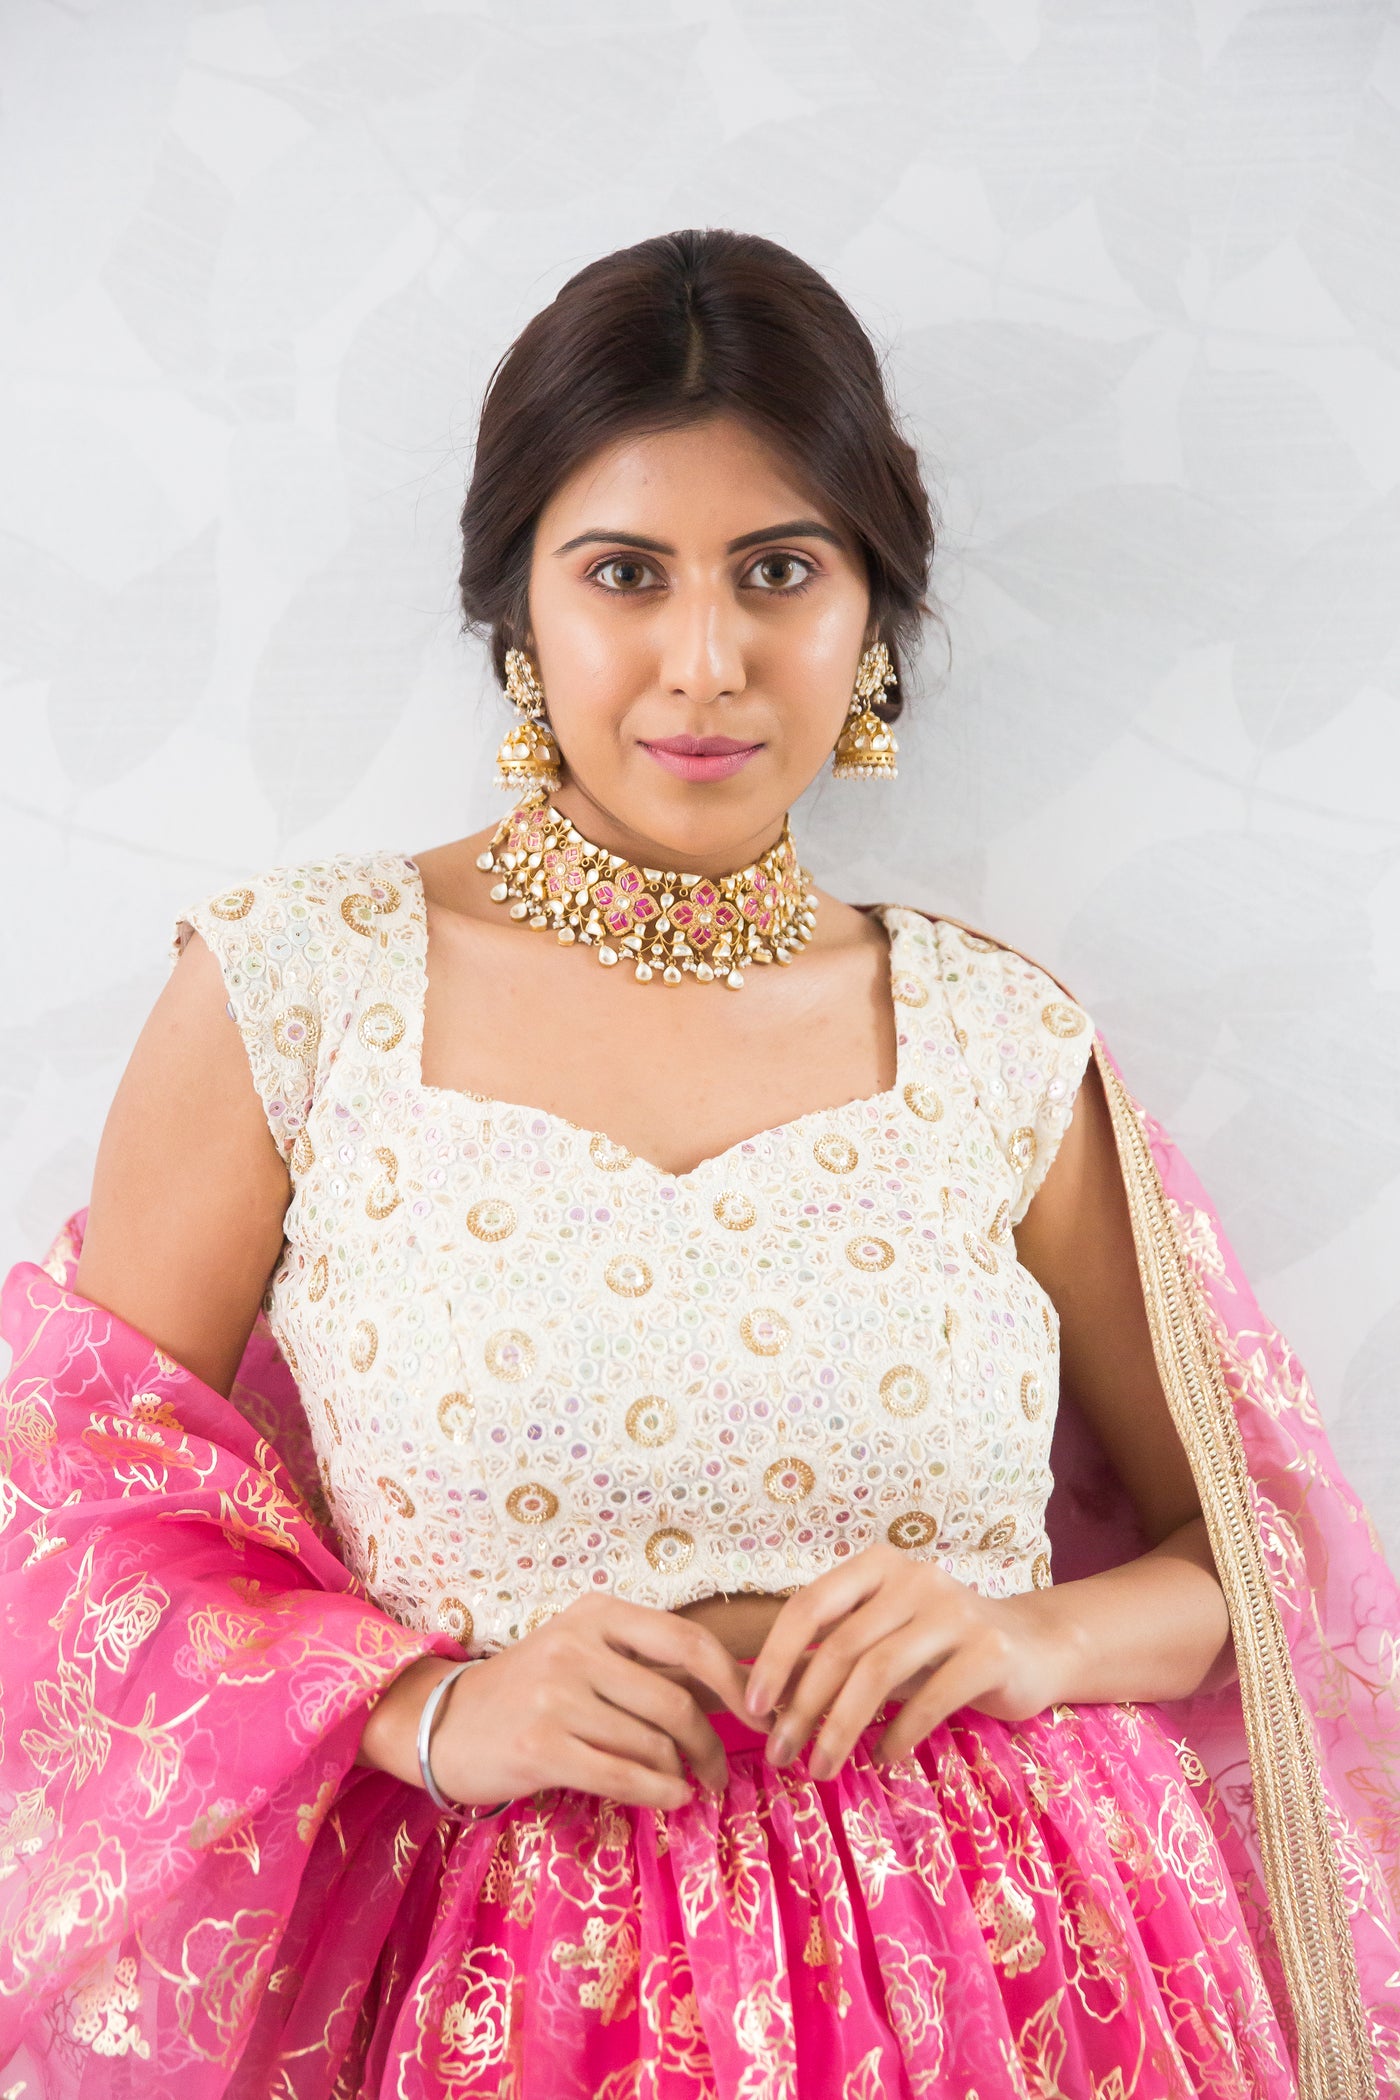 The best jewelry collection of Shivangi Joshi in Yeh Rishta Kya Kehlata Hai